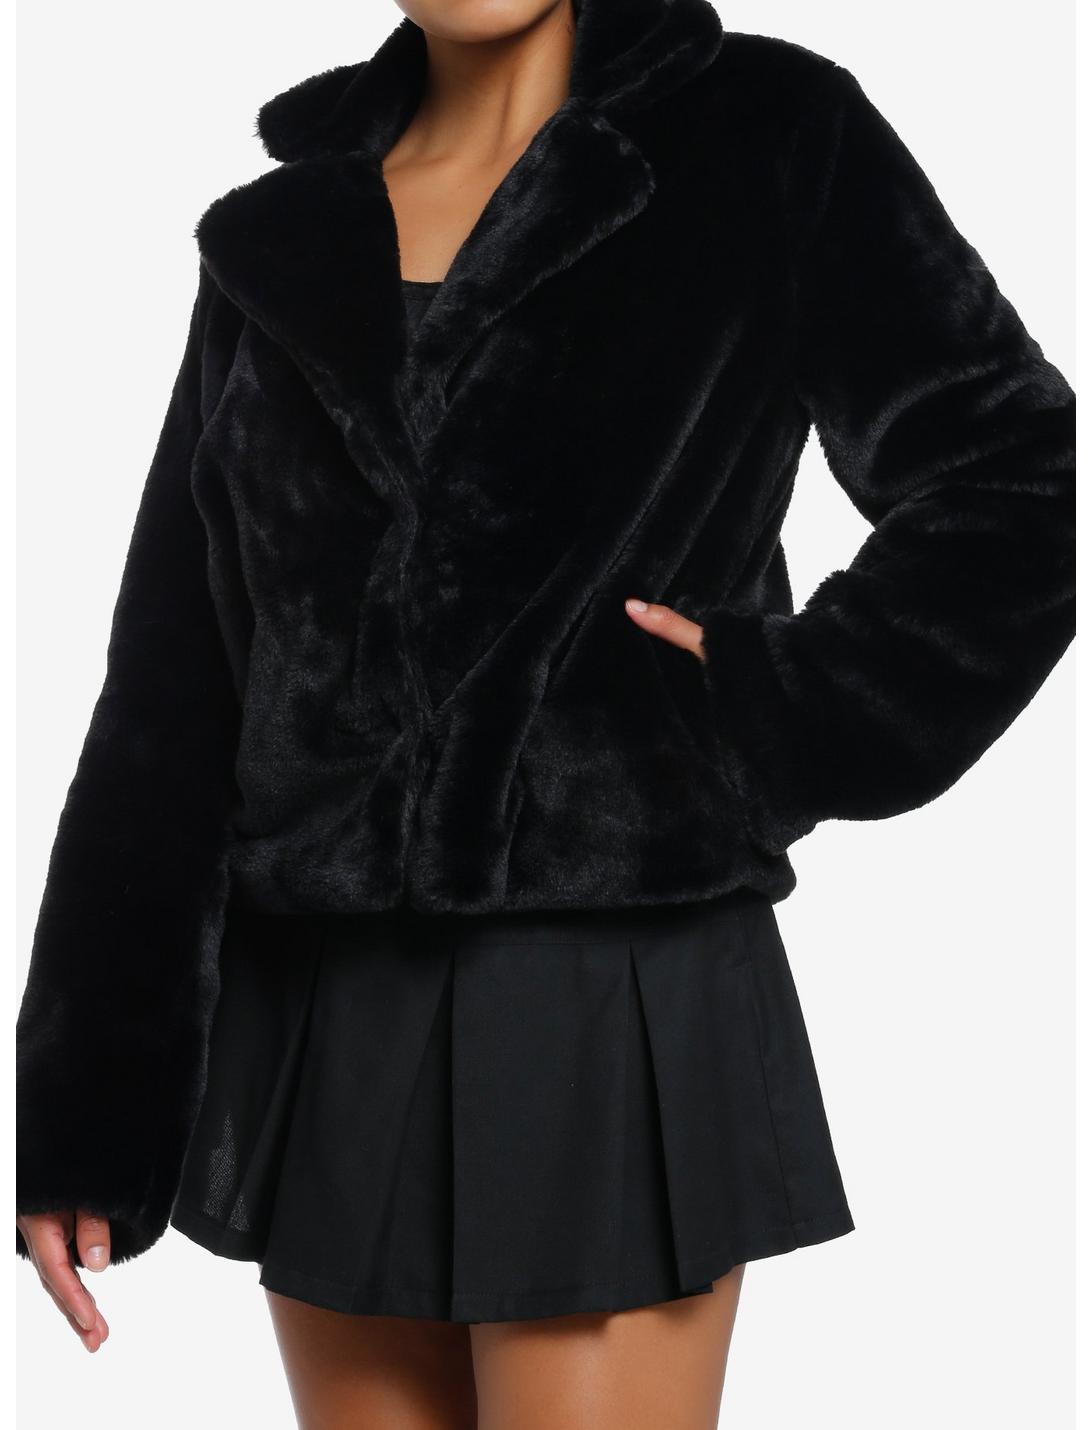 Cosmic Aura Black Faux Fur Girls Jacket, BLACK, hi-res